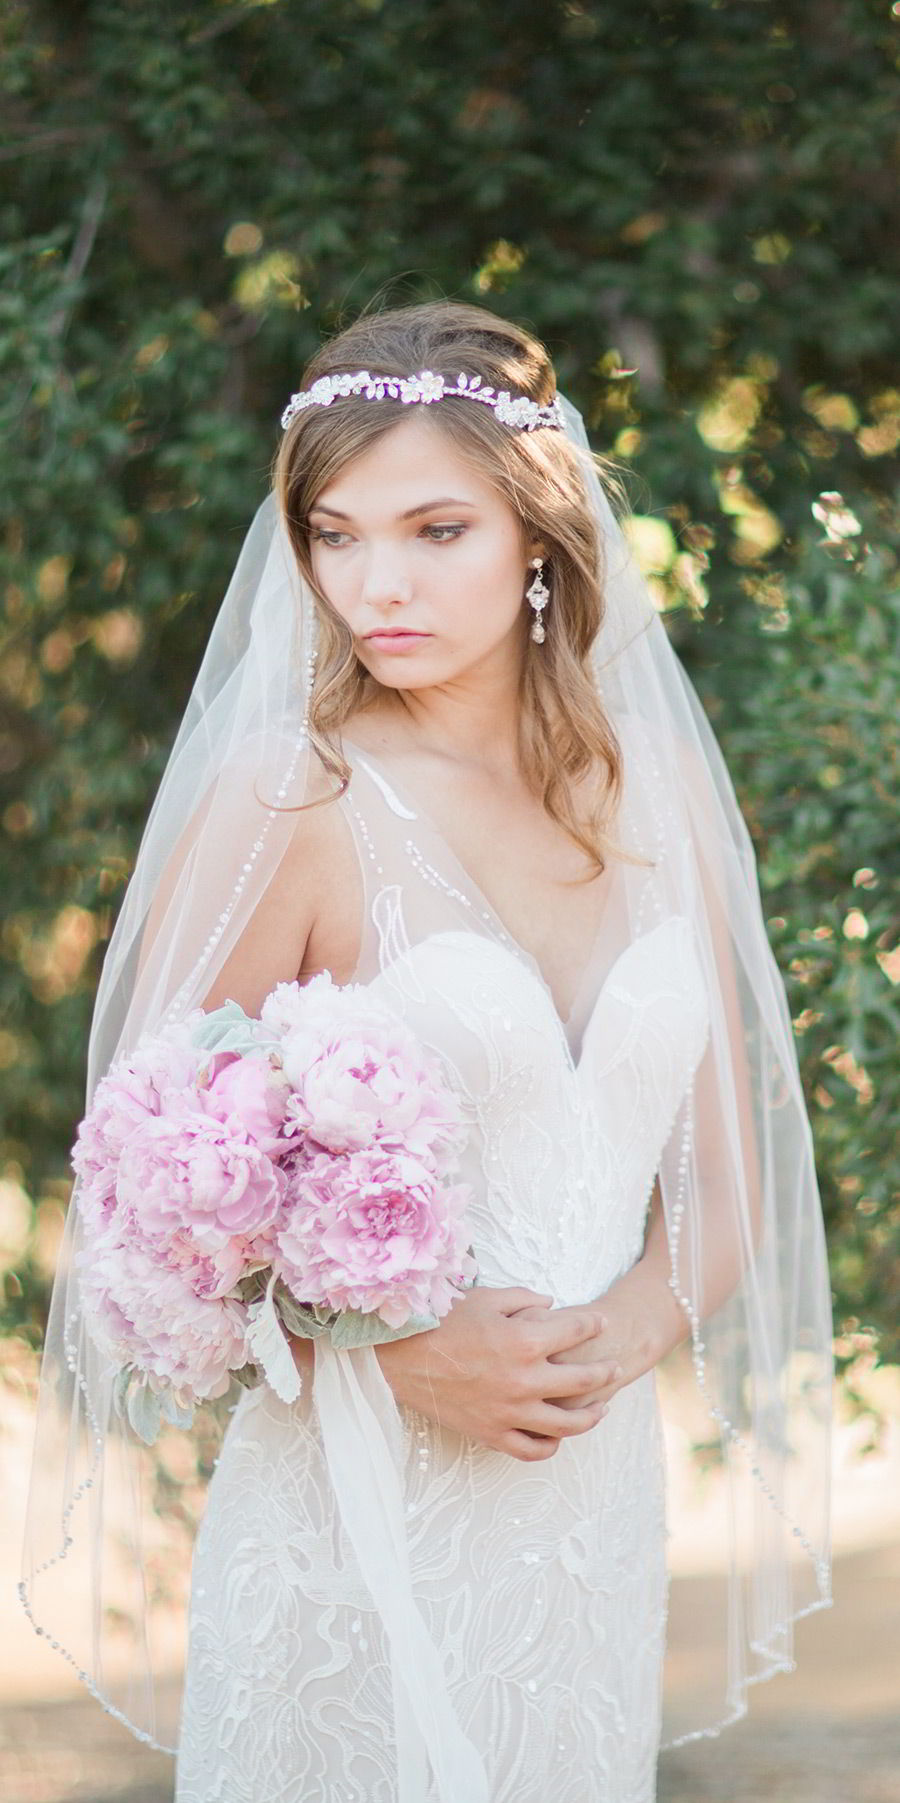 https://www.weddinginspirasi.com/wp-content/uploads/2017/08/bel-aire-bridal-accessories-6742-rhinestone-headpiece-halo-veil.jpg